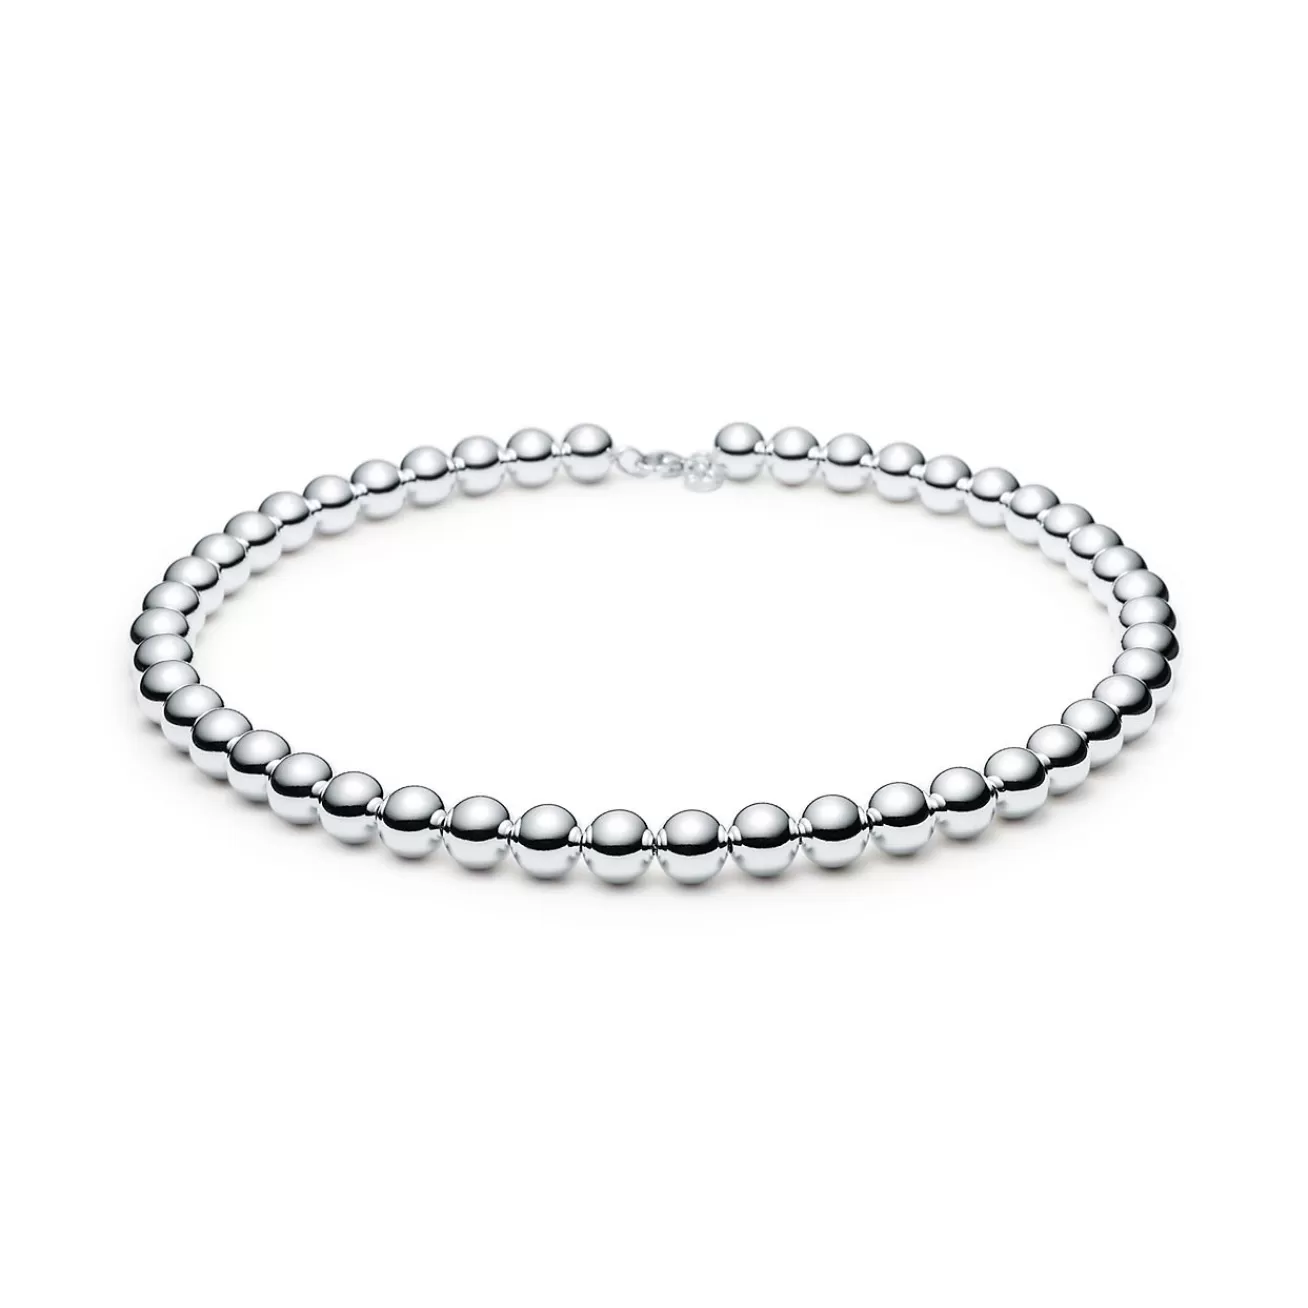 Tiffany & Co. Tiffany HardWear ball necklace in sterling silver. | ^ Necklaces & Pendants | Men's Jewelry